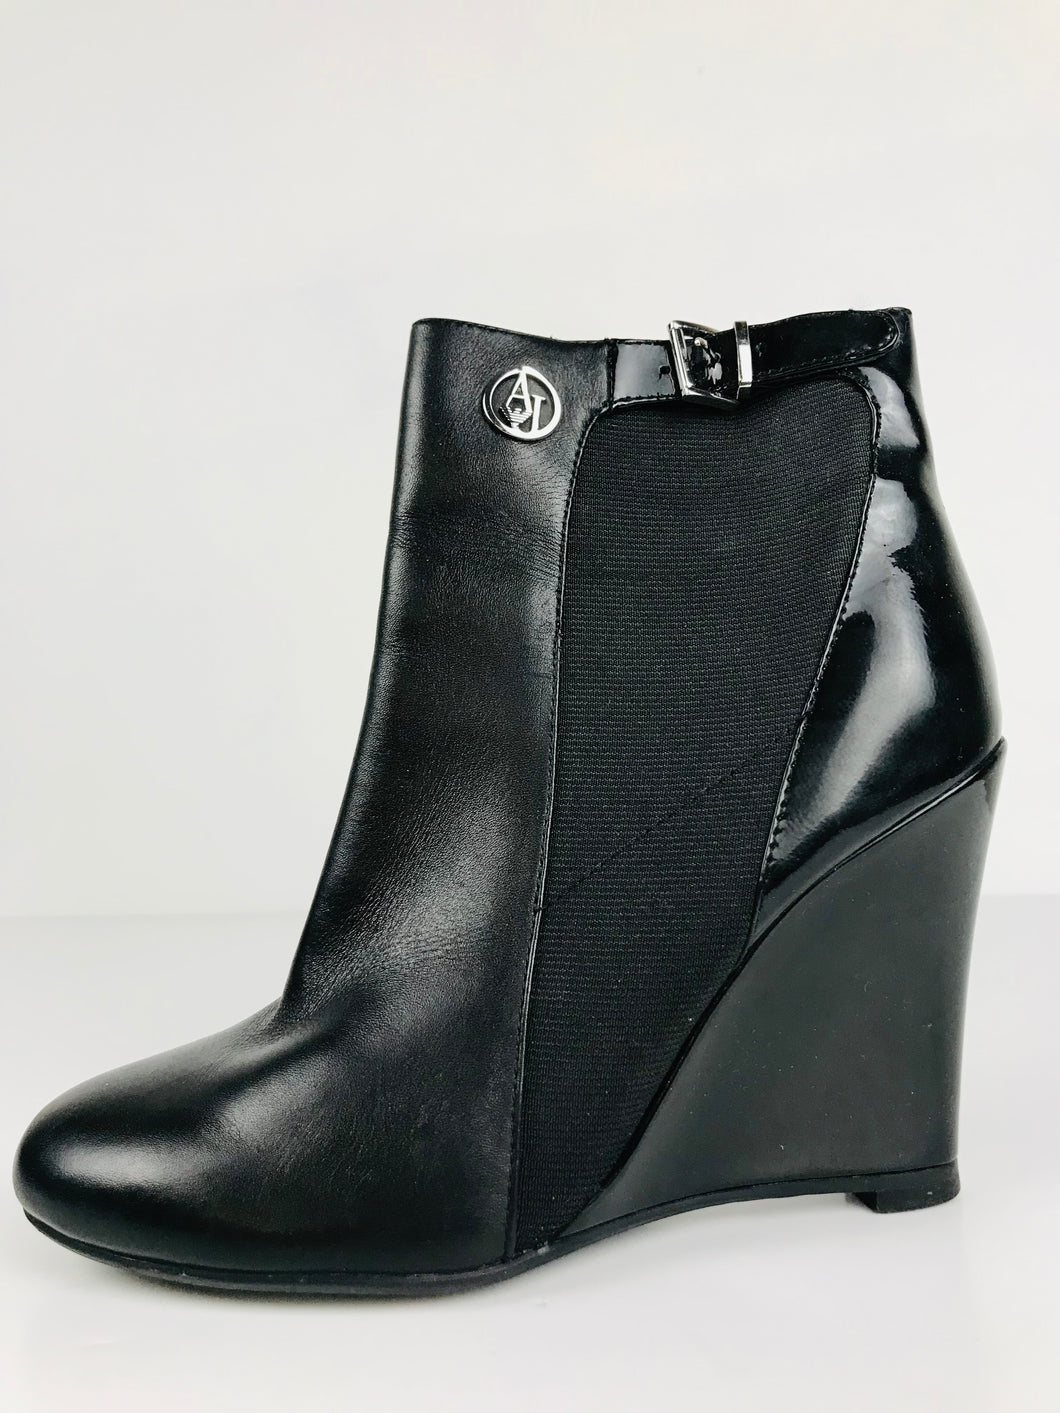 Armani Jeans Women's Buckle Boots | 38 UK5 | Black